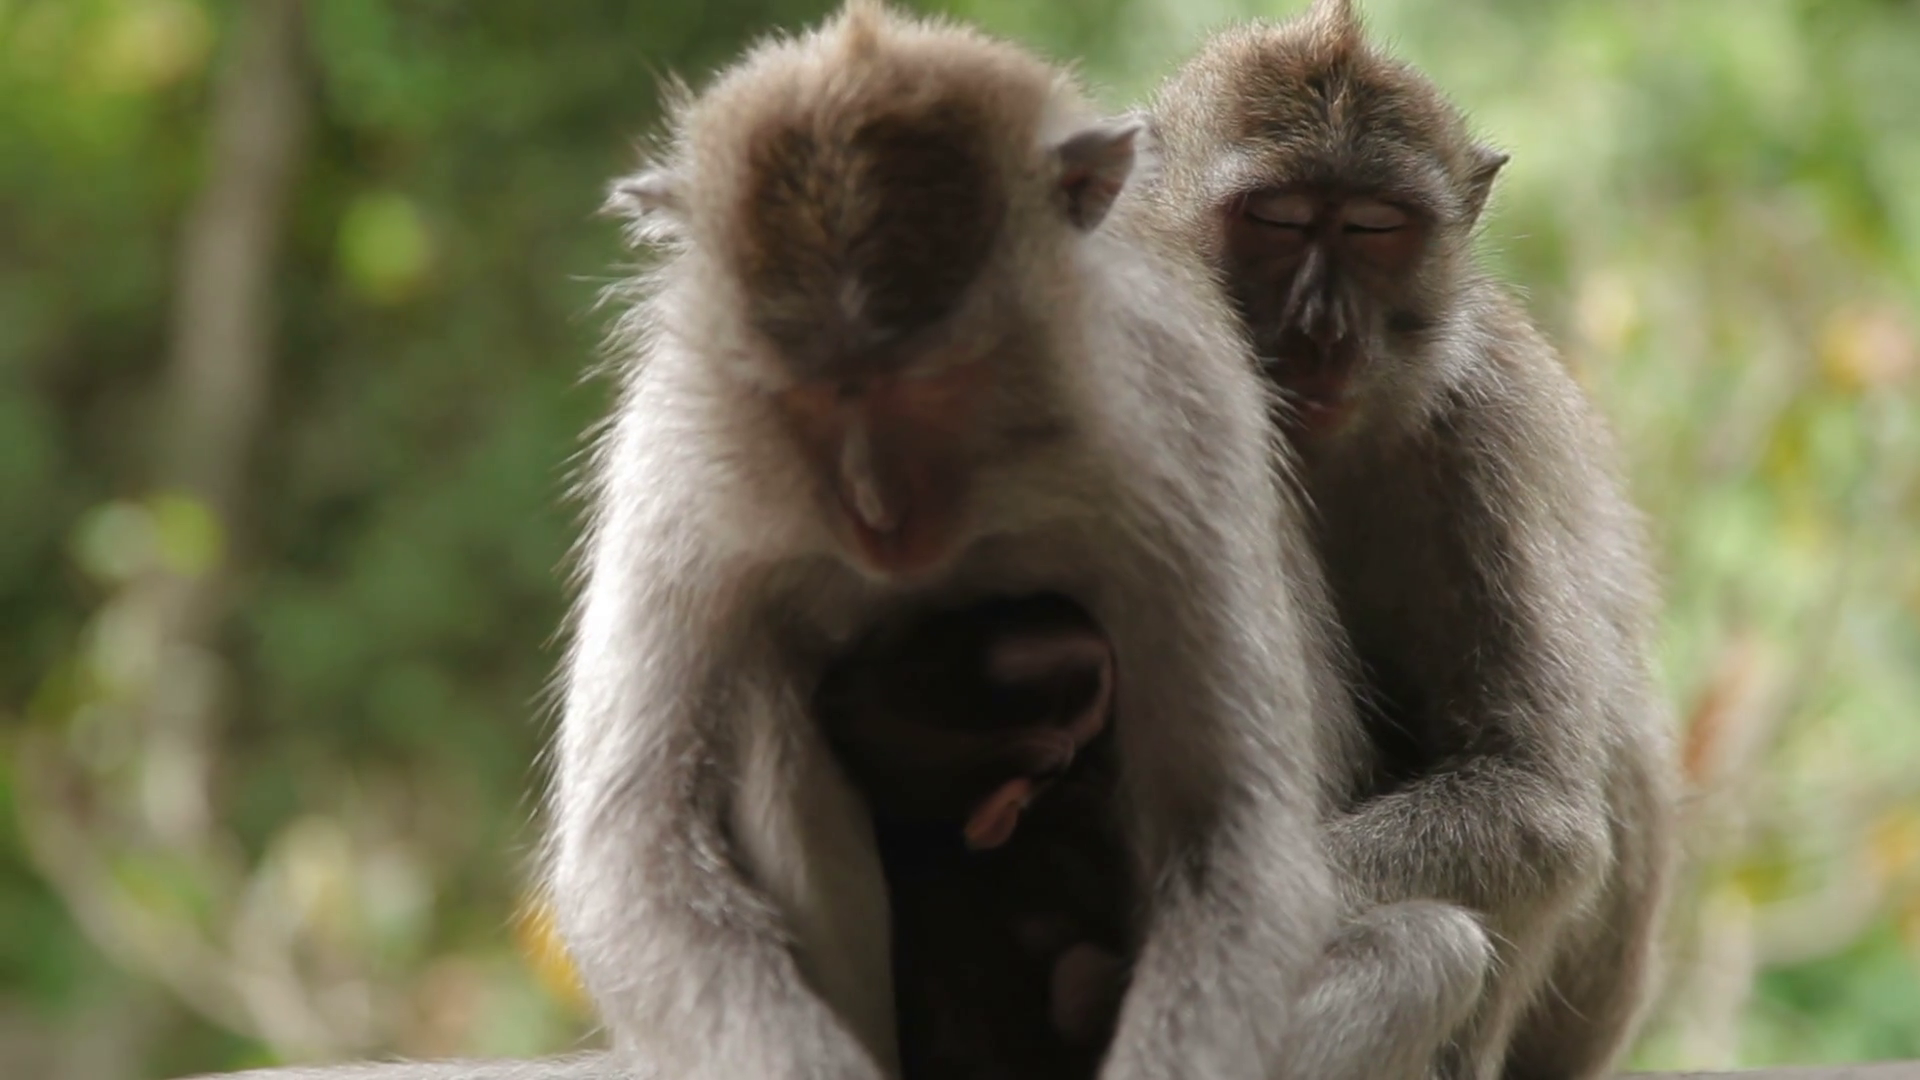 Sleeping monkeys. with cub. Monkey forest in Ubud Bali Indonesia ...